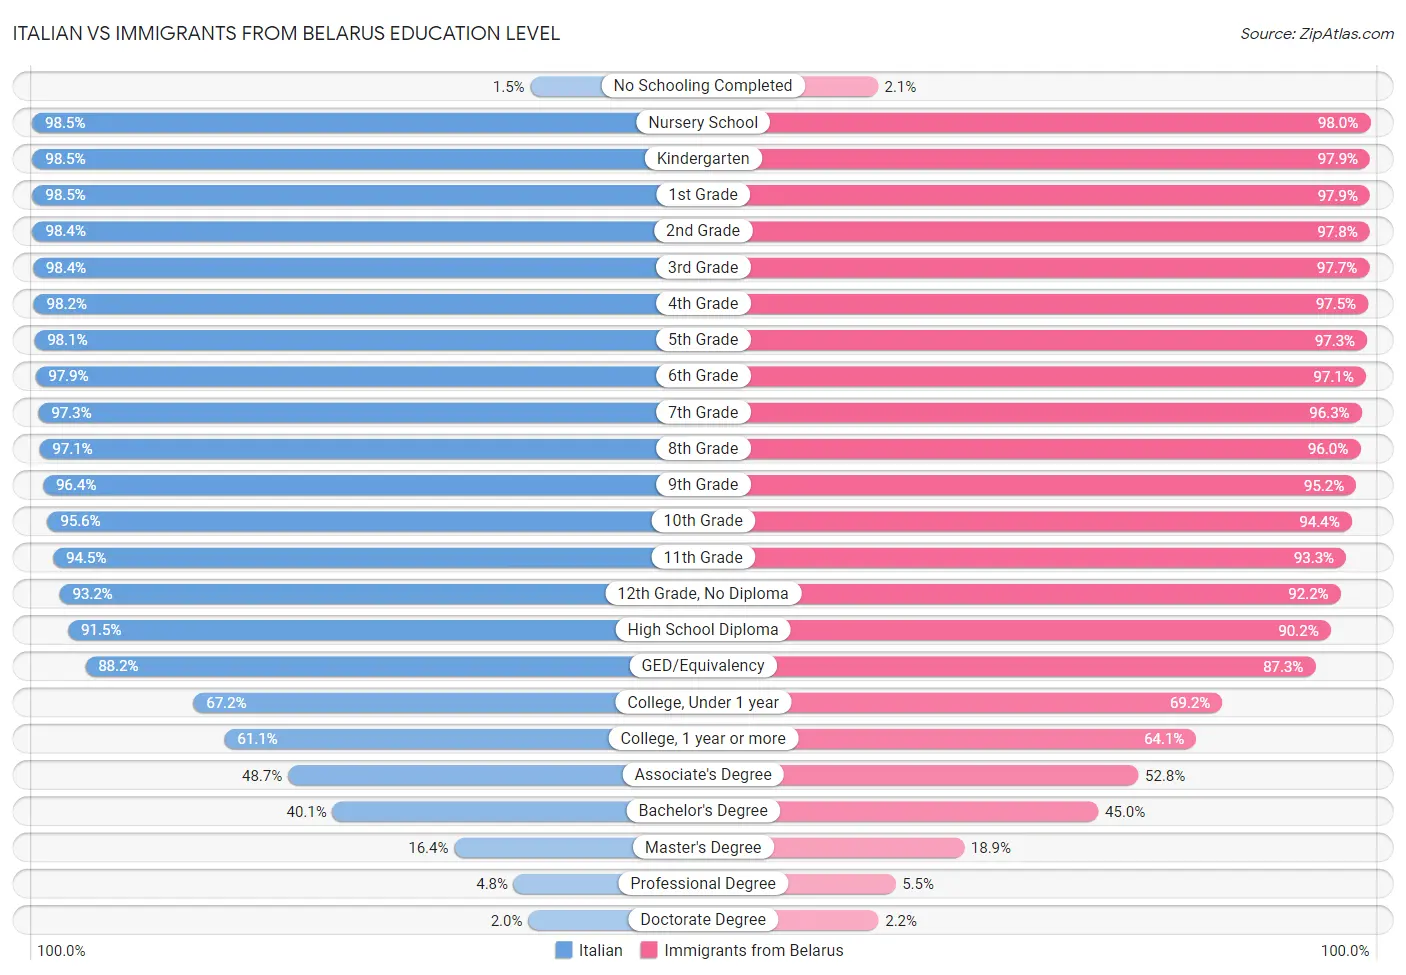 Italian vs Immigrants from Belarus Education Level